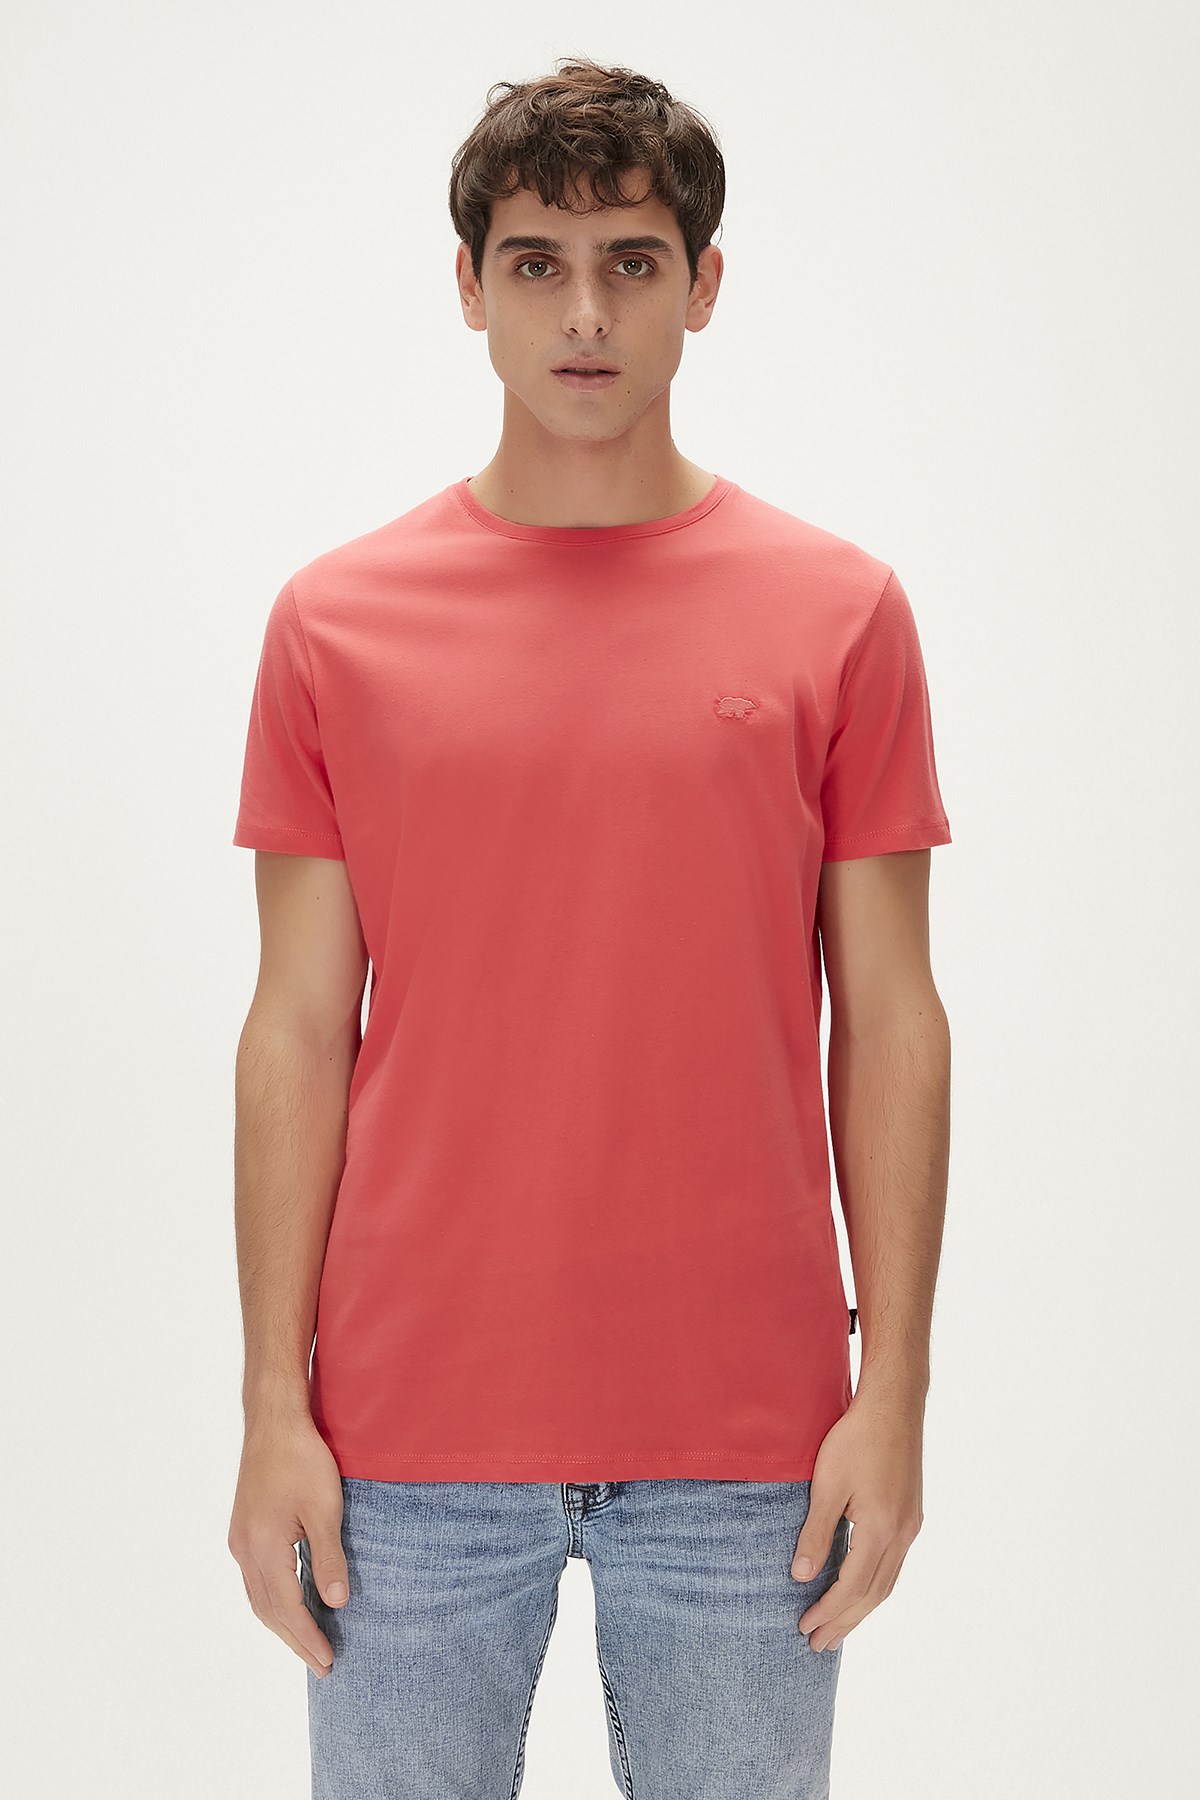 Solid Vermilion Red Basic Men's T-Shirt | BAD BEAR